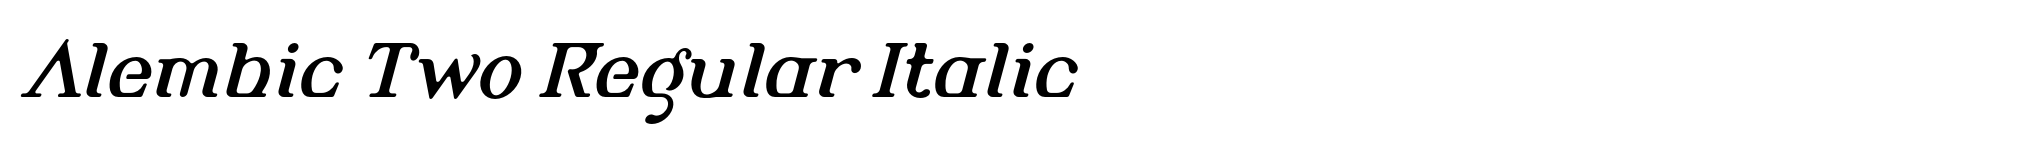 Alembic Two Regular Italic image